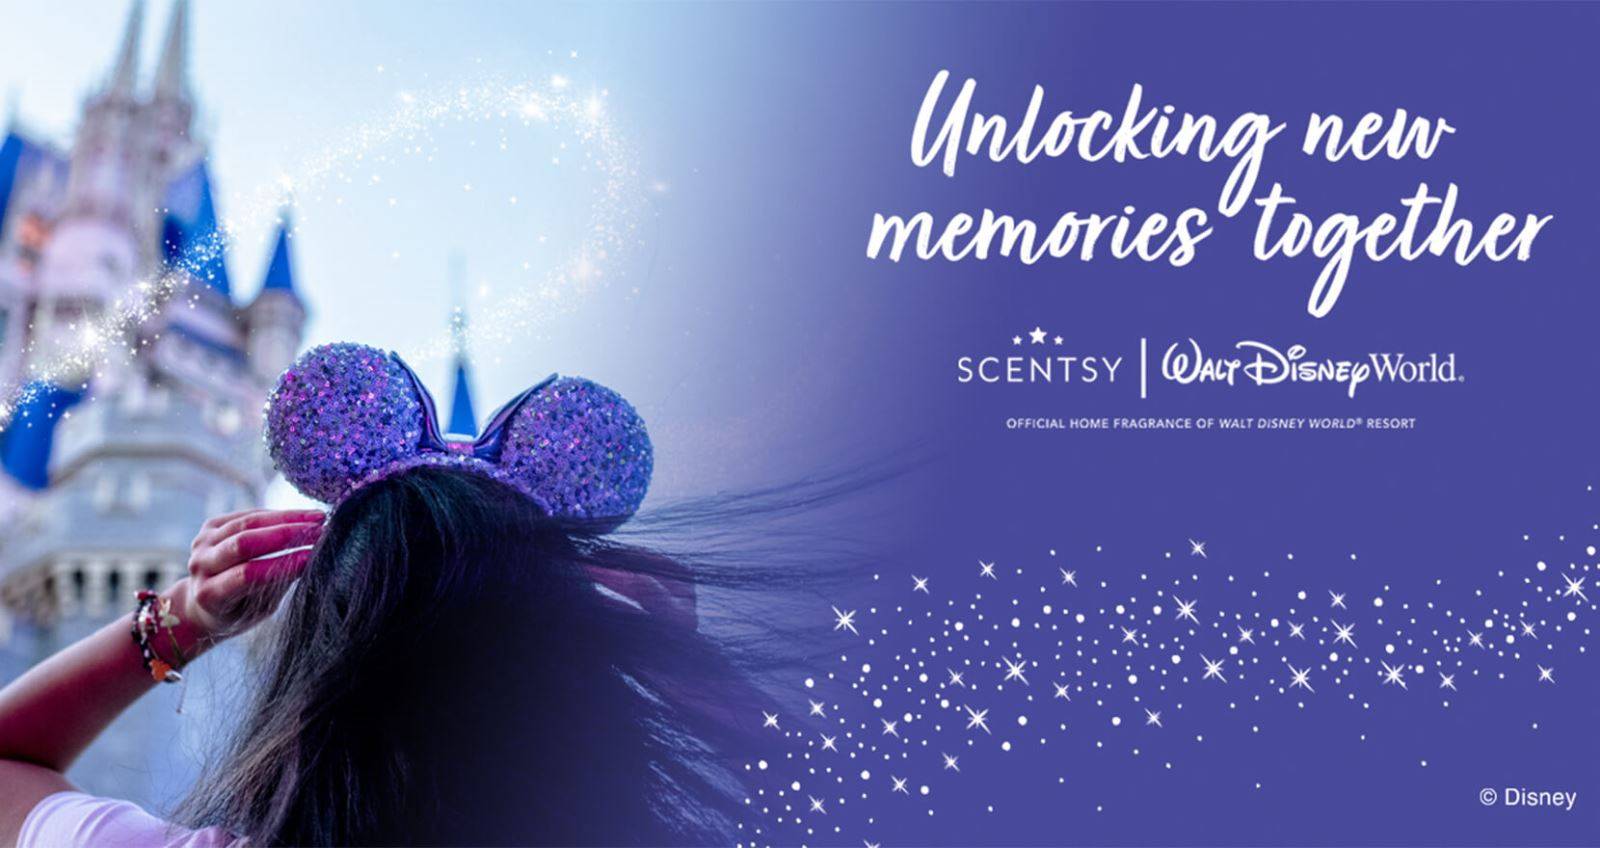 Scentsy - Official Home Fragrance of Walt Disney World Resort